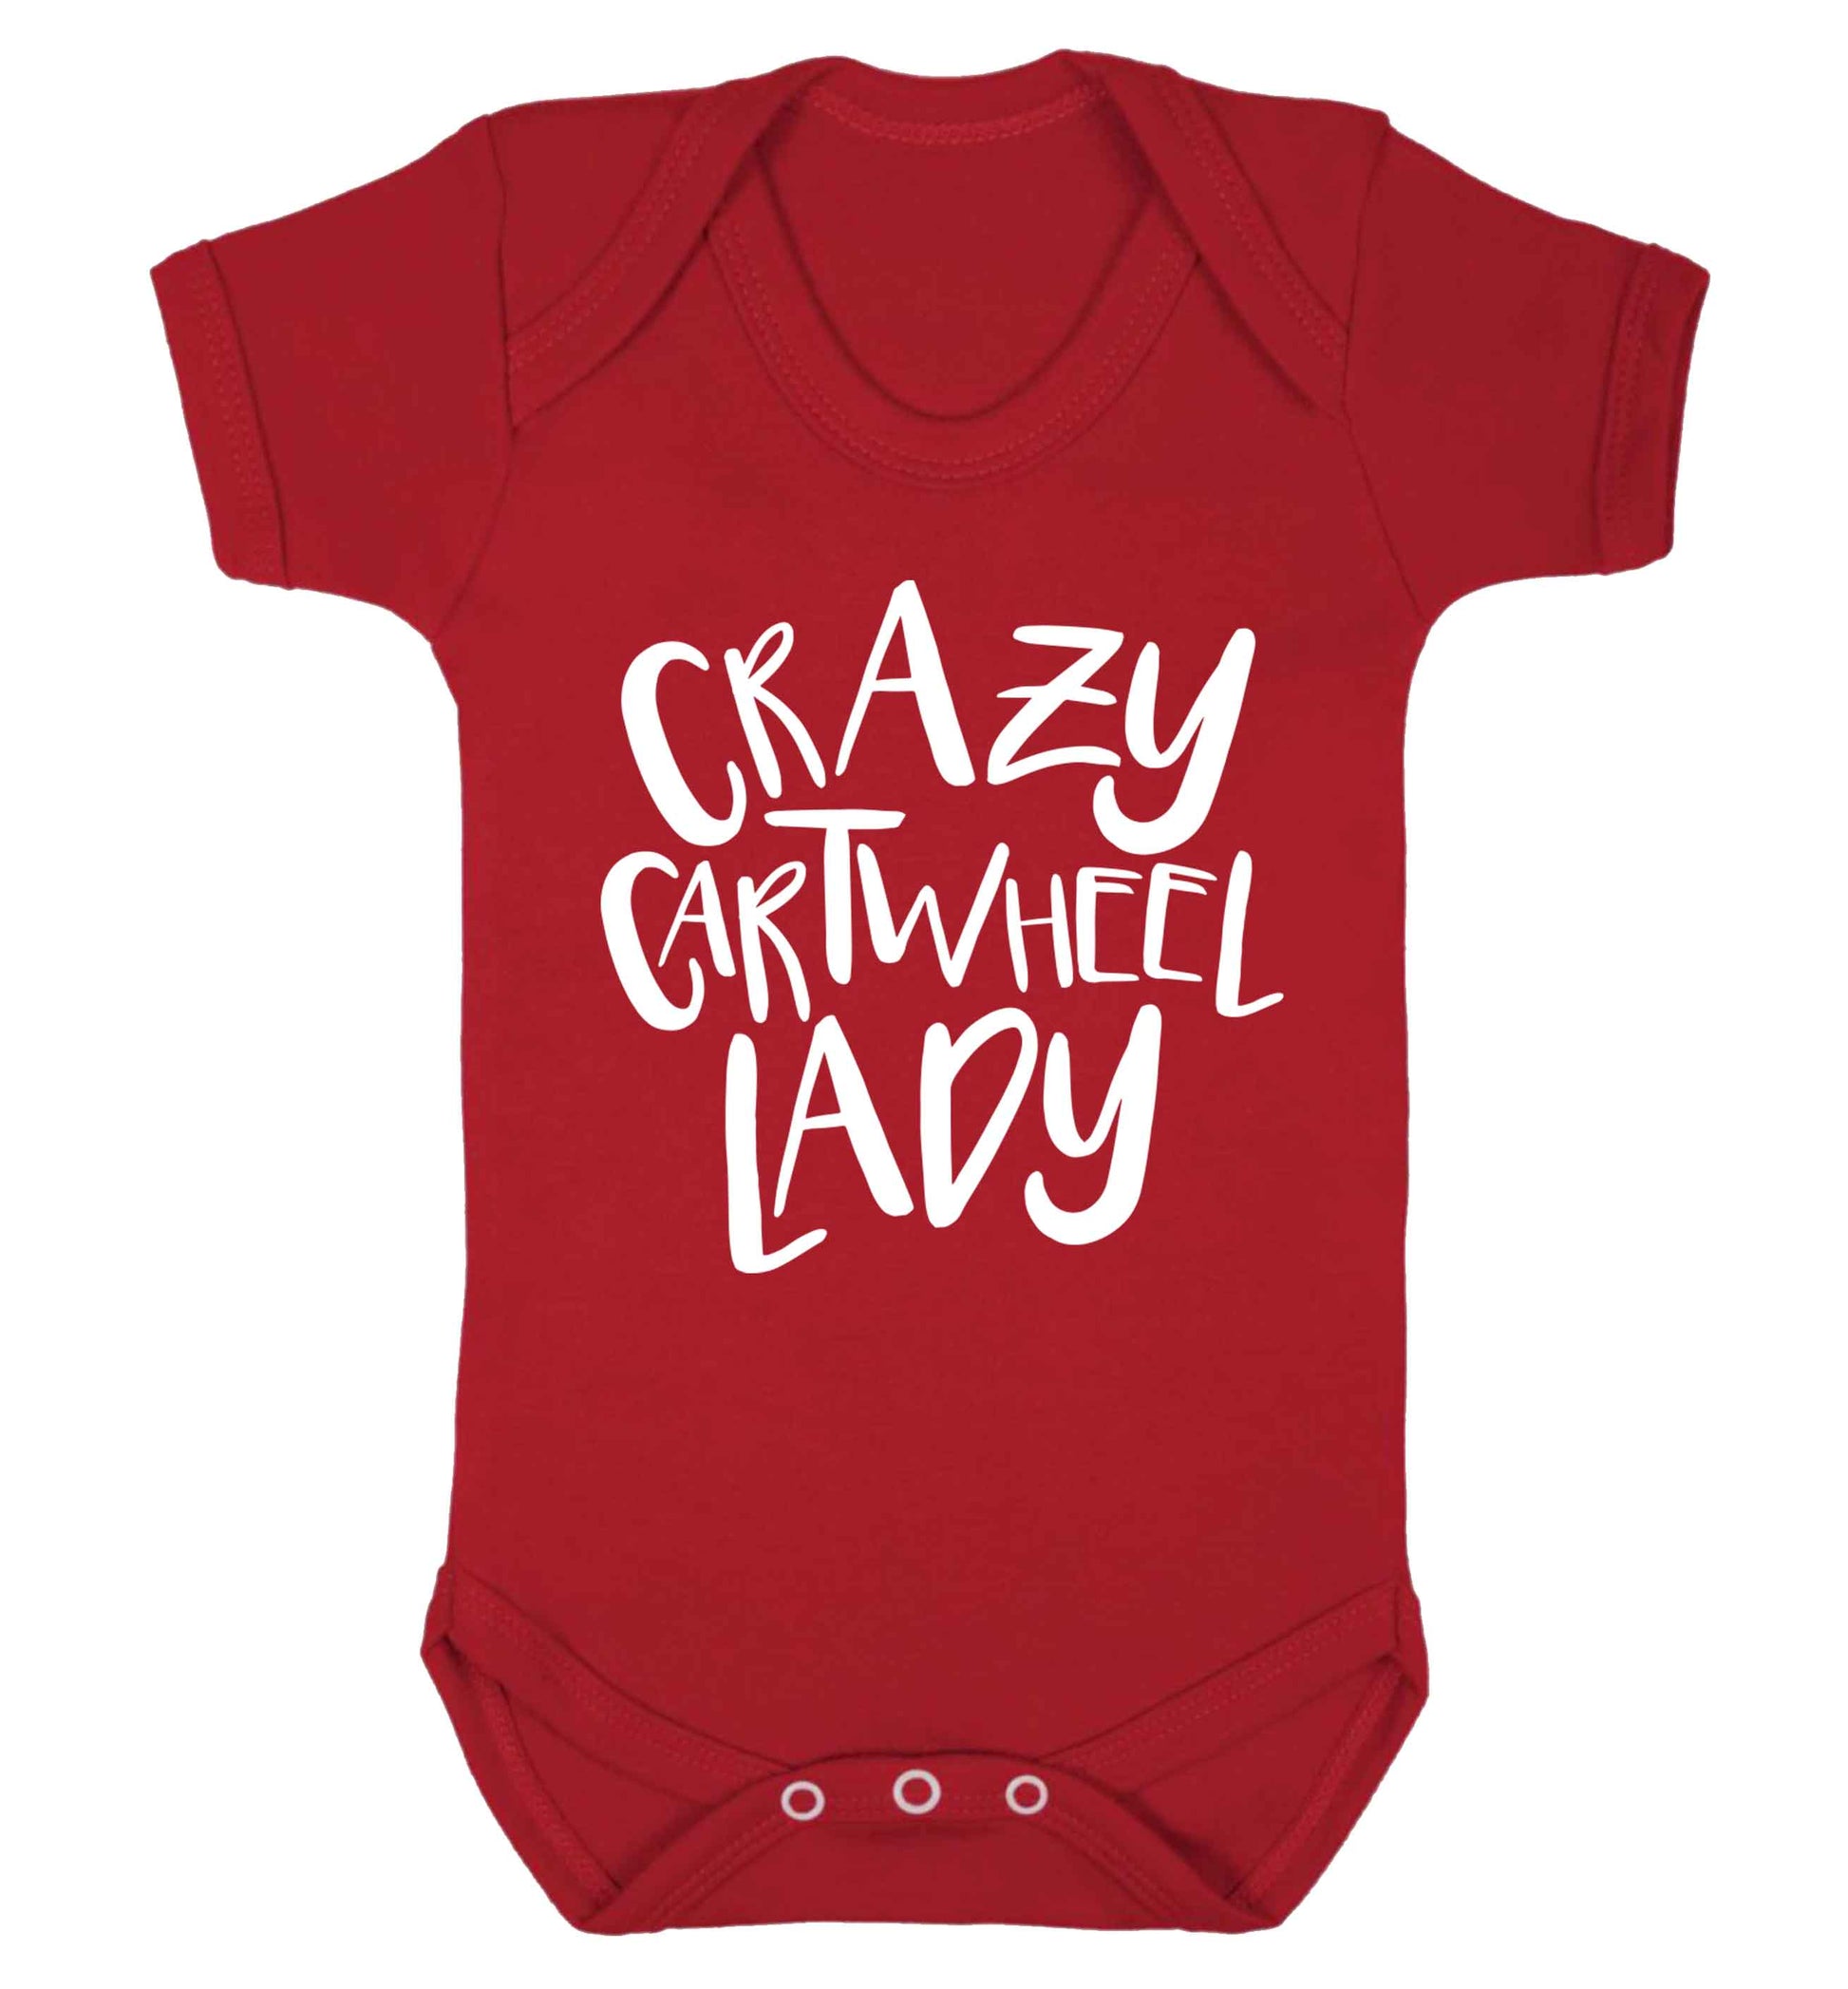 Crazy cartwheel lady Baby Vest red 18-24 months